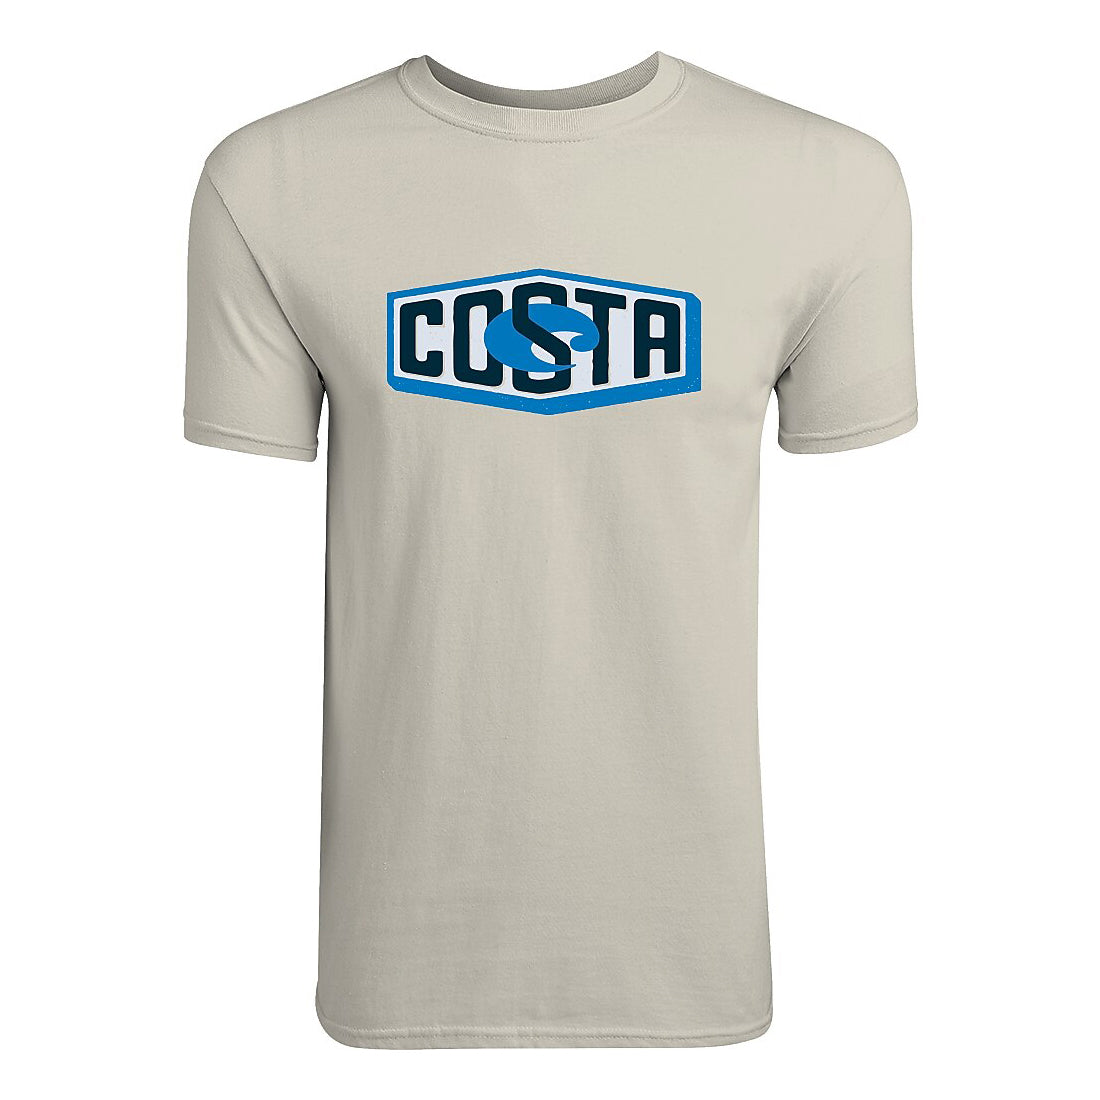 Costa Moderno Crew Short Sleeve T-Shirt